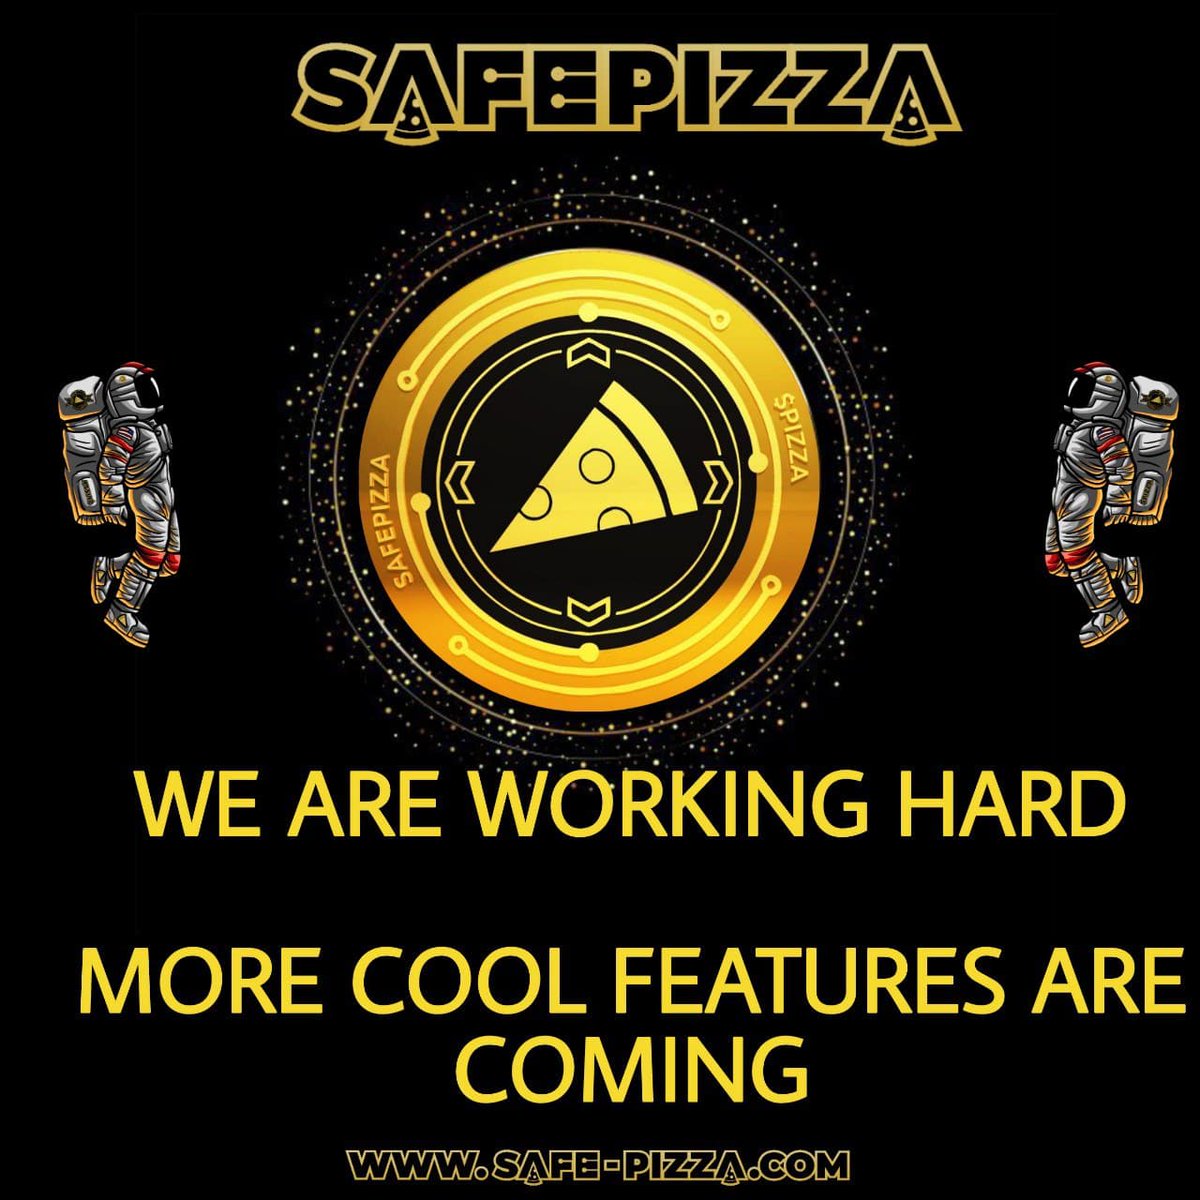 t.me/safepizza safe-pizza.com